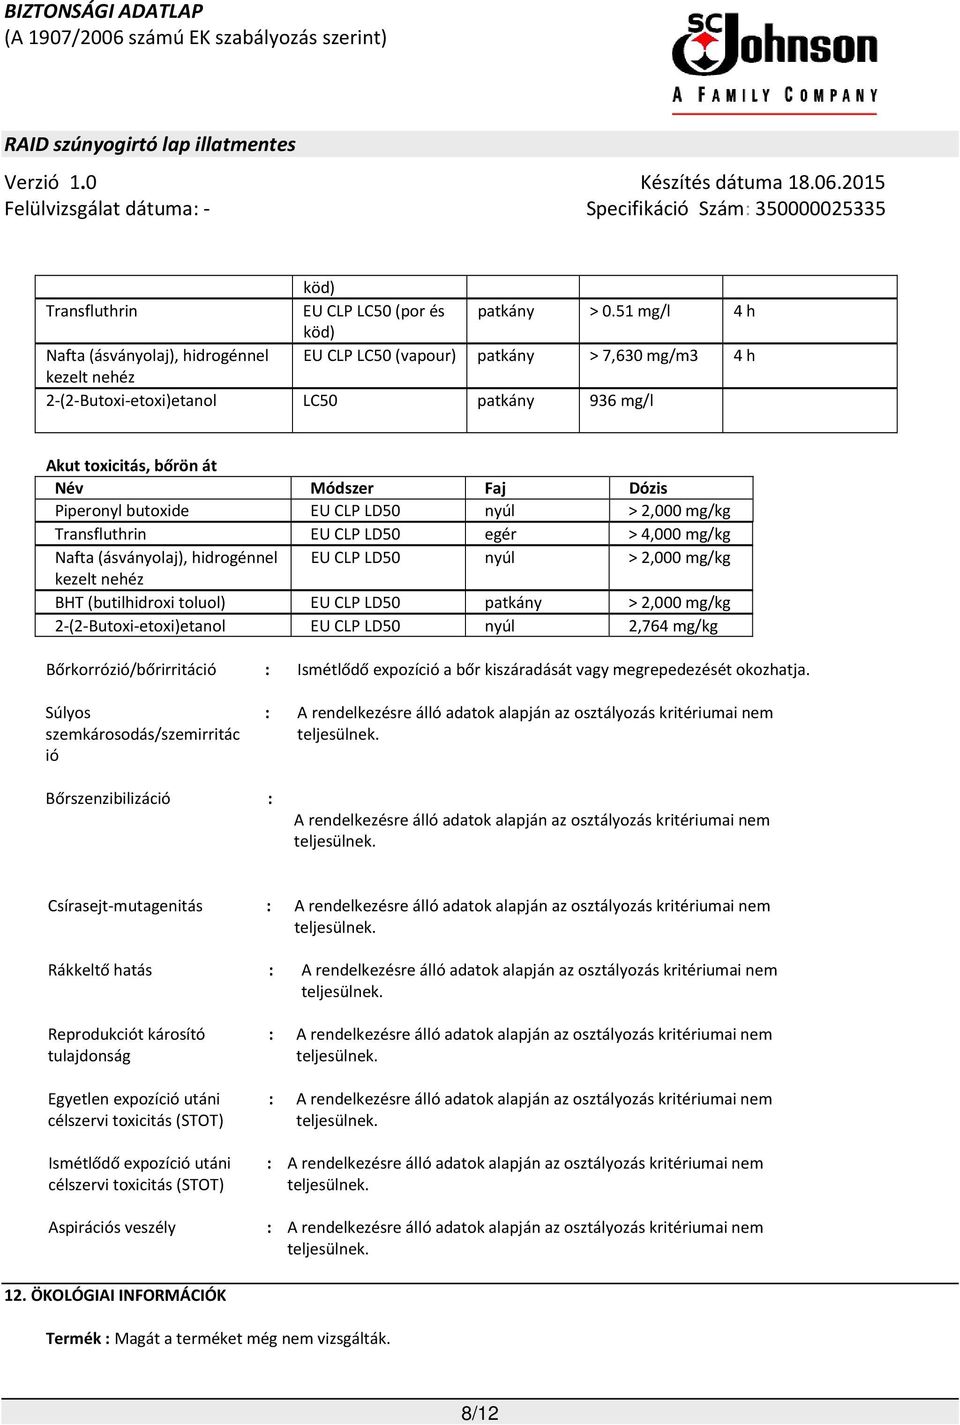 Dózis Piperonyl butoxide EU CLP LD50 nyúl > 2,000 mg/kg Transfluthrin EU CLP LD50 egér > 4,000 mg/kg Nafta (ásványolaj), hidrogénnel EU CLP LD50 nyúl > 2,000 mg/kg kezelt nehéz BHT (butilhidroxi